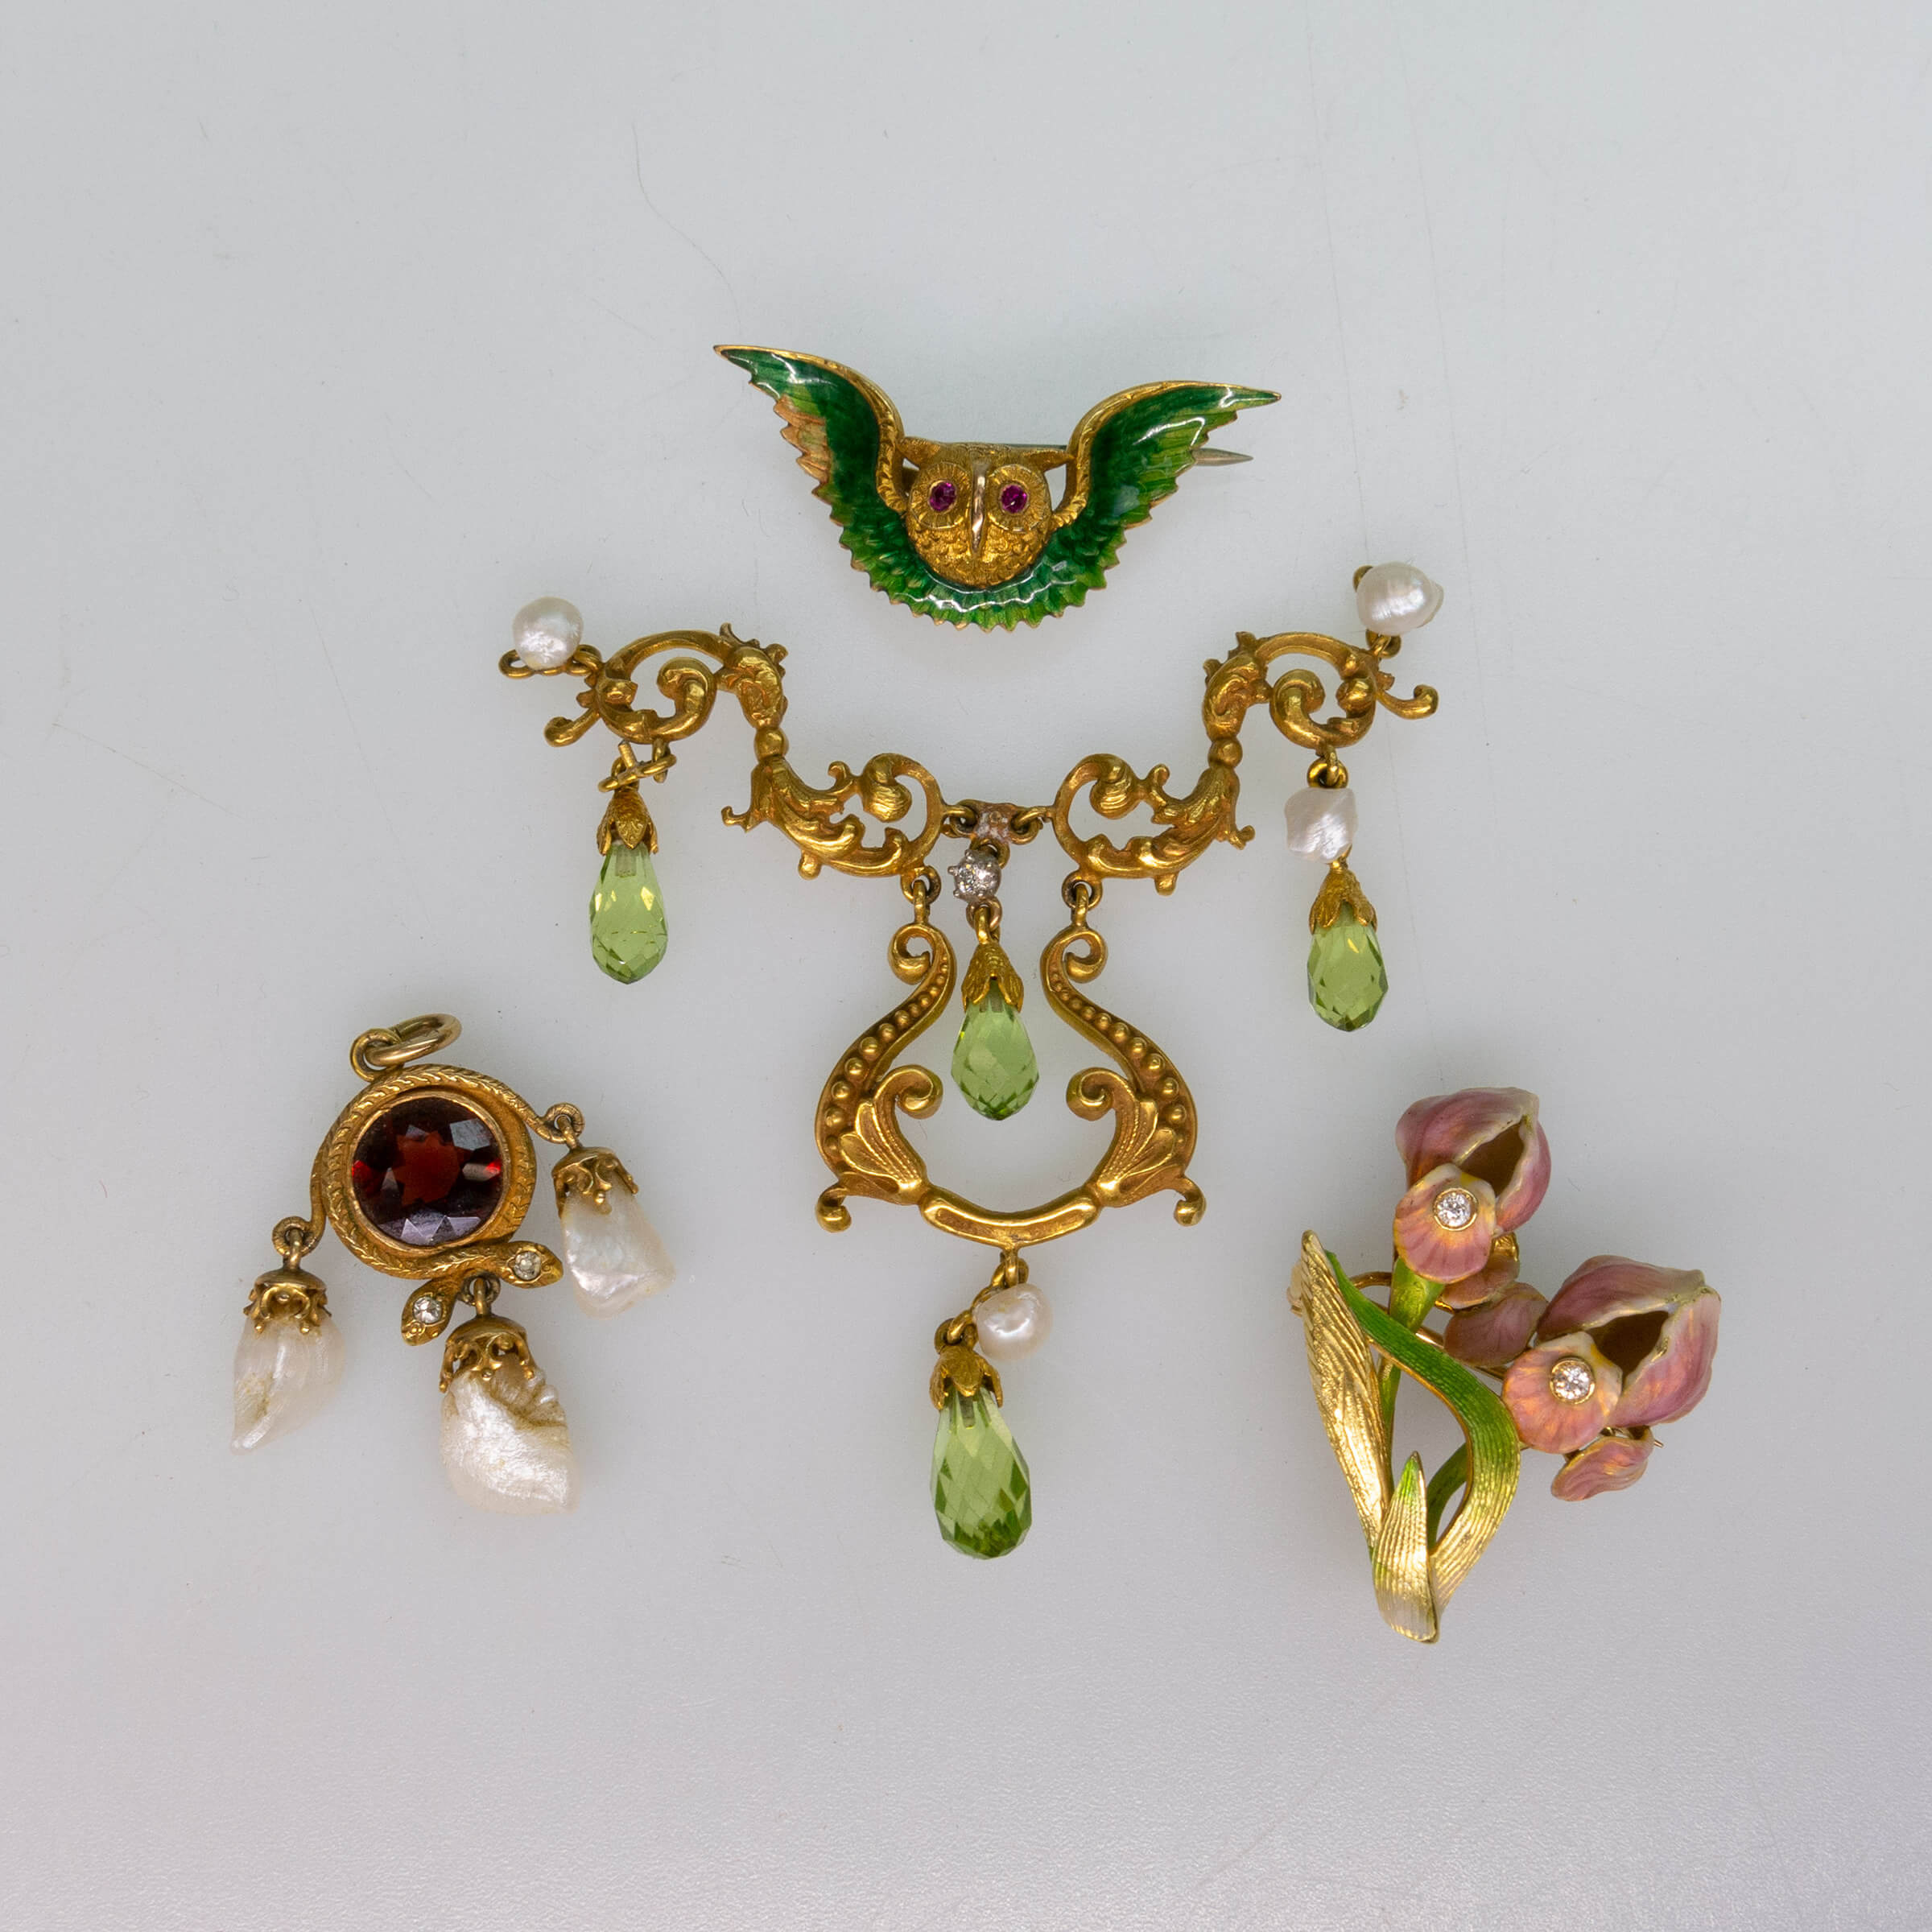 4 Pieces Of Vintage Jewellery